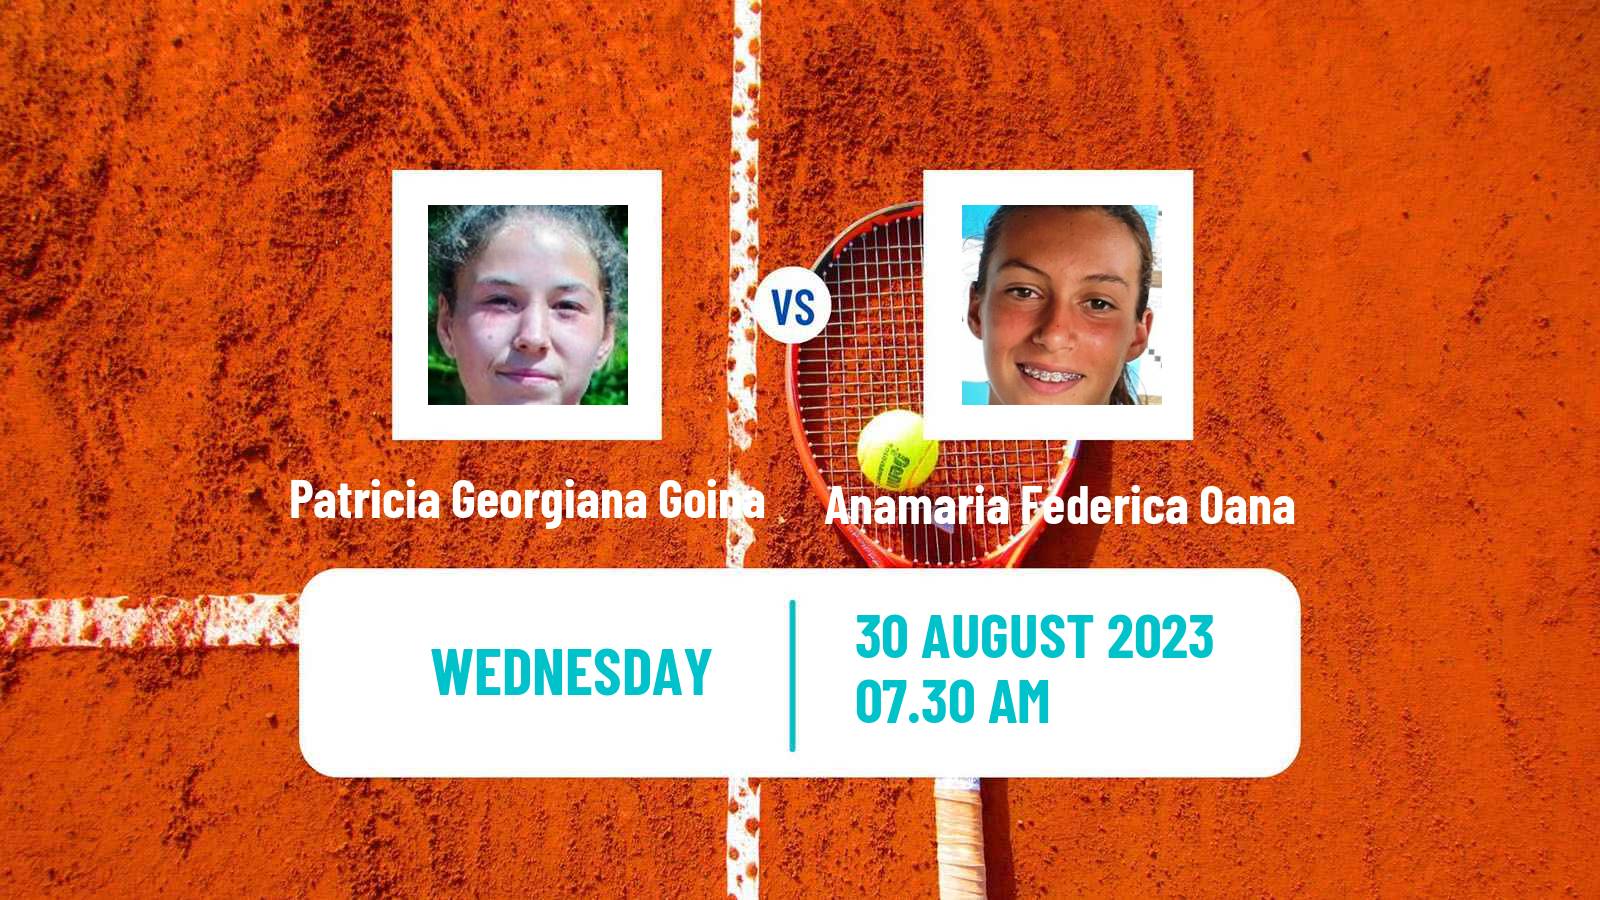 Tennis ITF W15 Brasov 2 Women Patricia Georgiana Goina - Anamaria Federica Oana